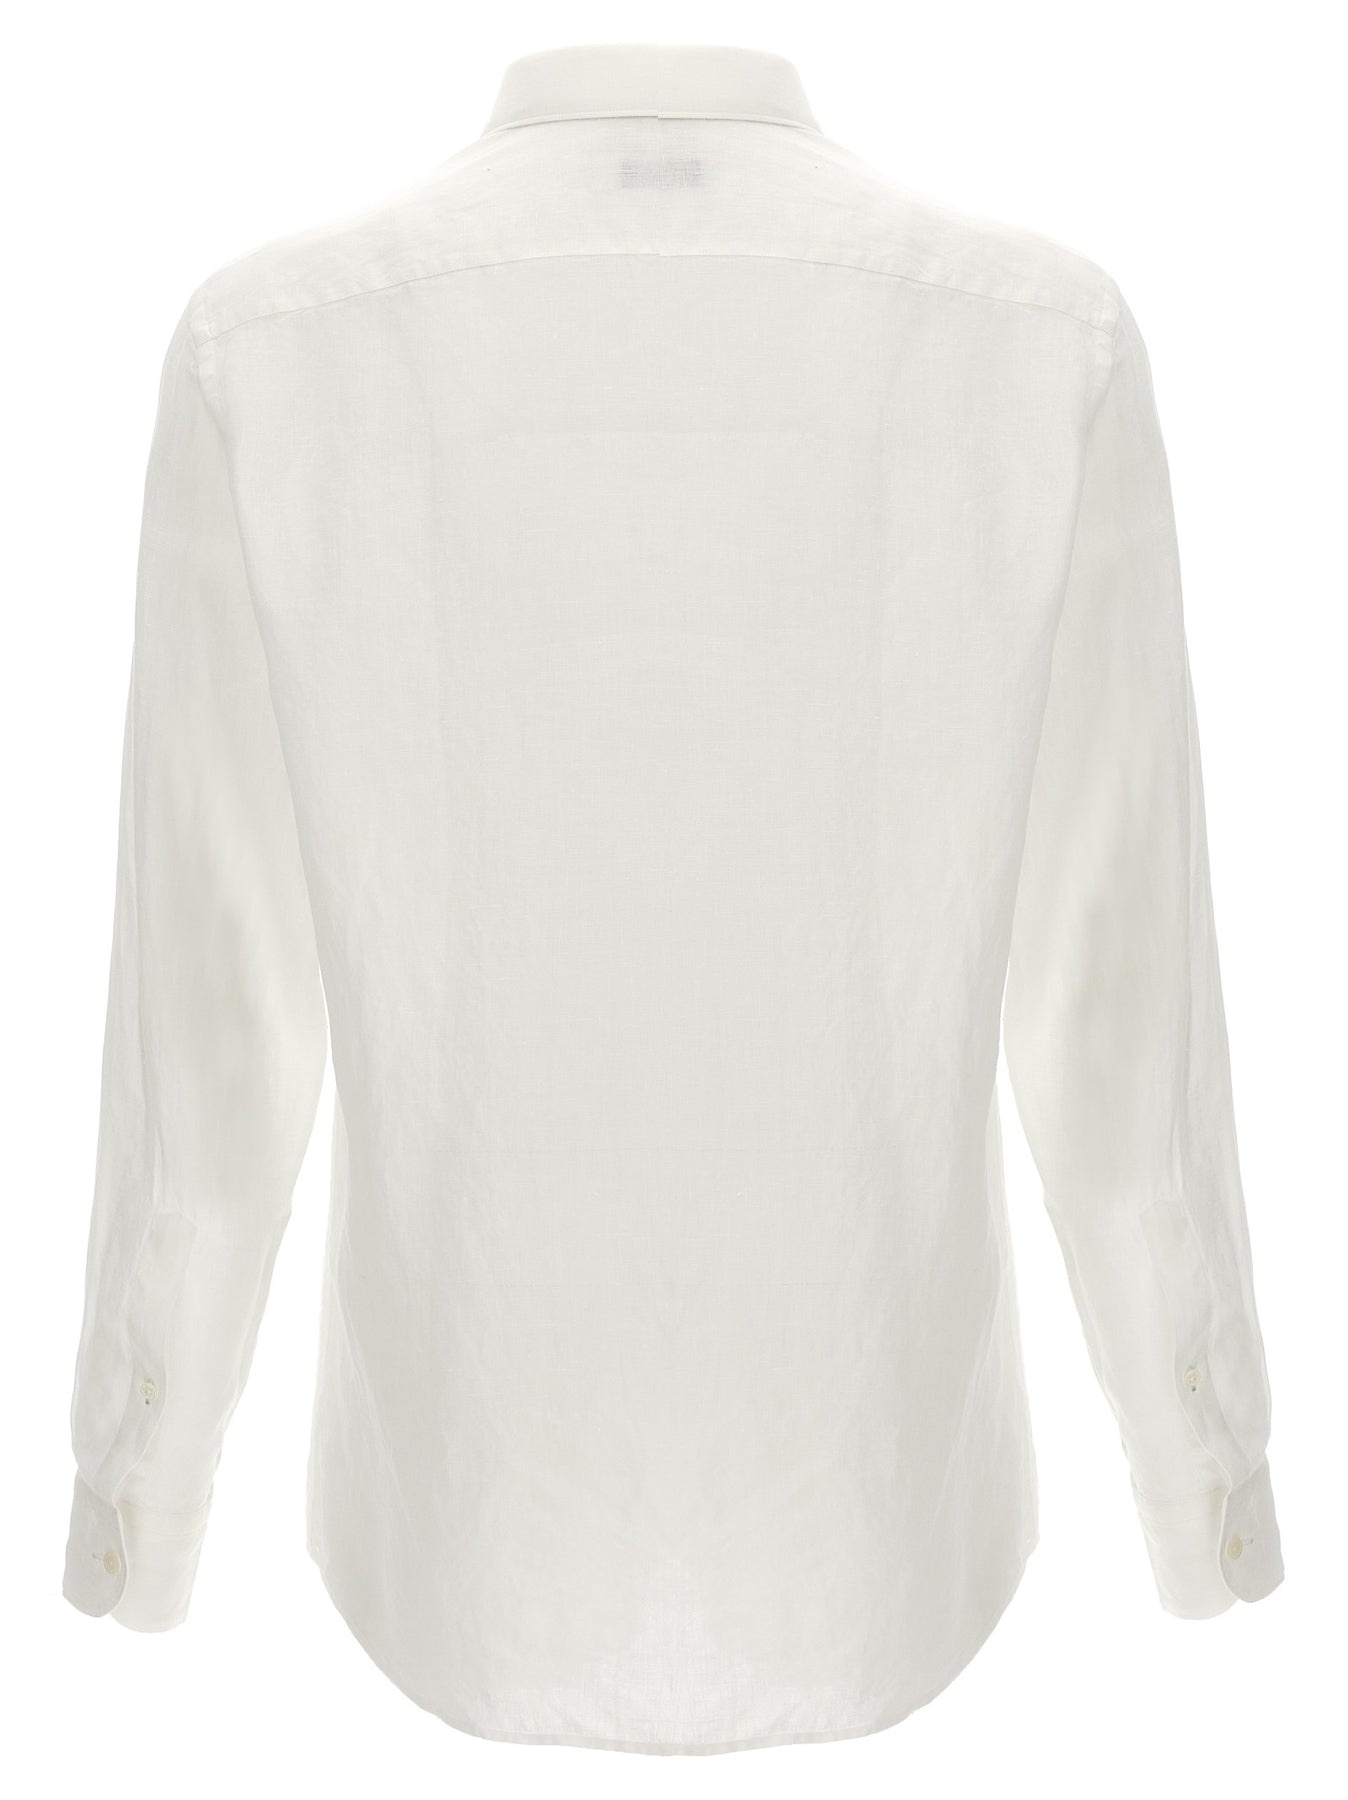 Linen Shirt Shirt, Blouse White - 2